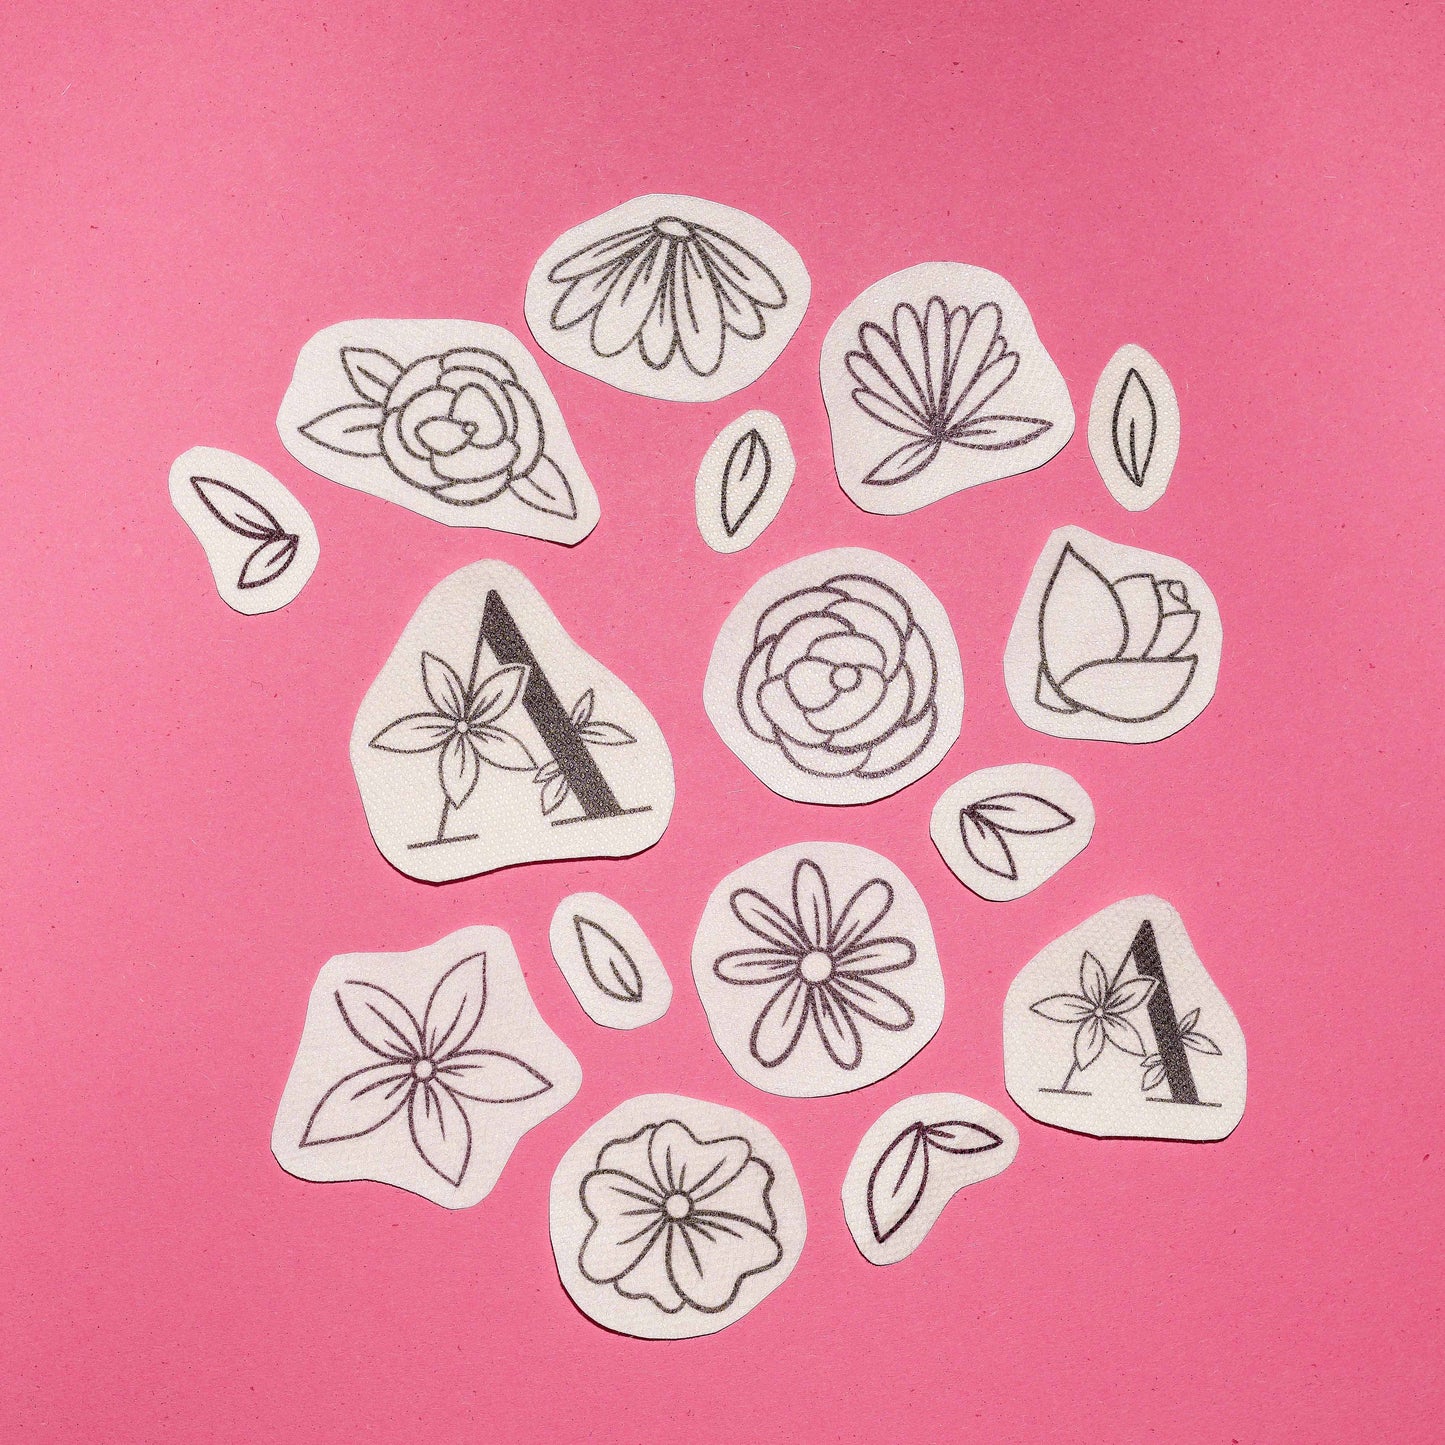 Monogram Blooms - Stick & Stitch